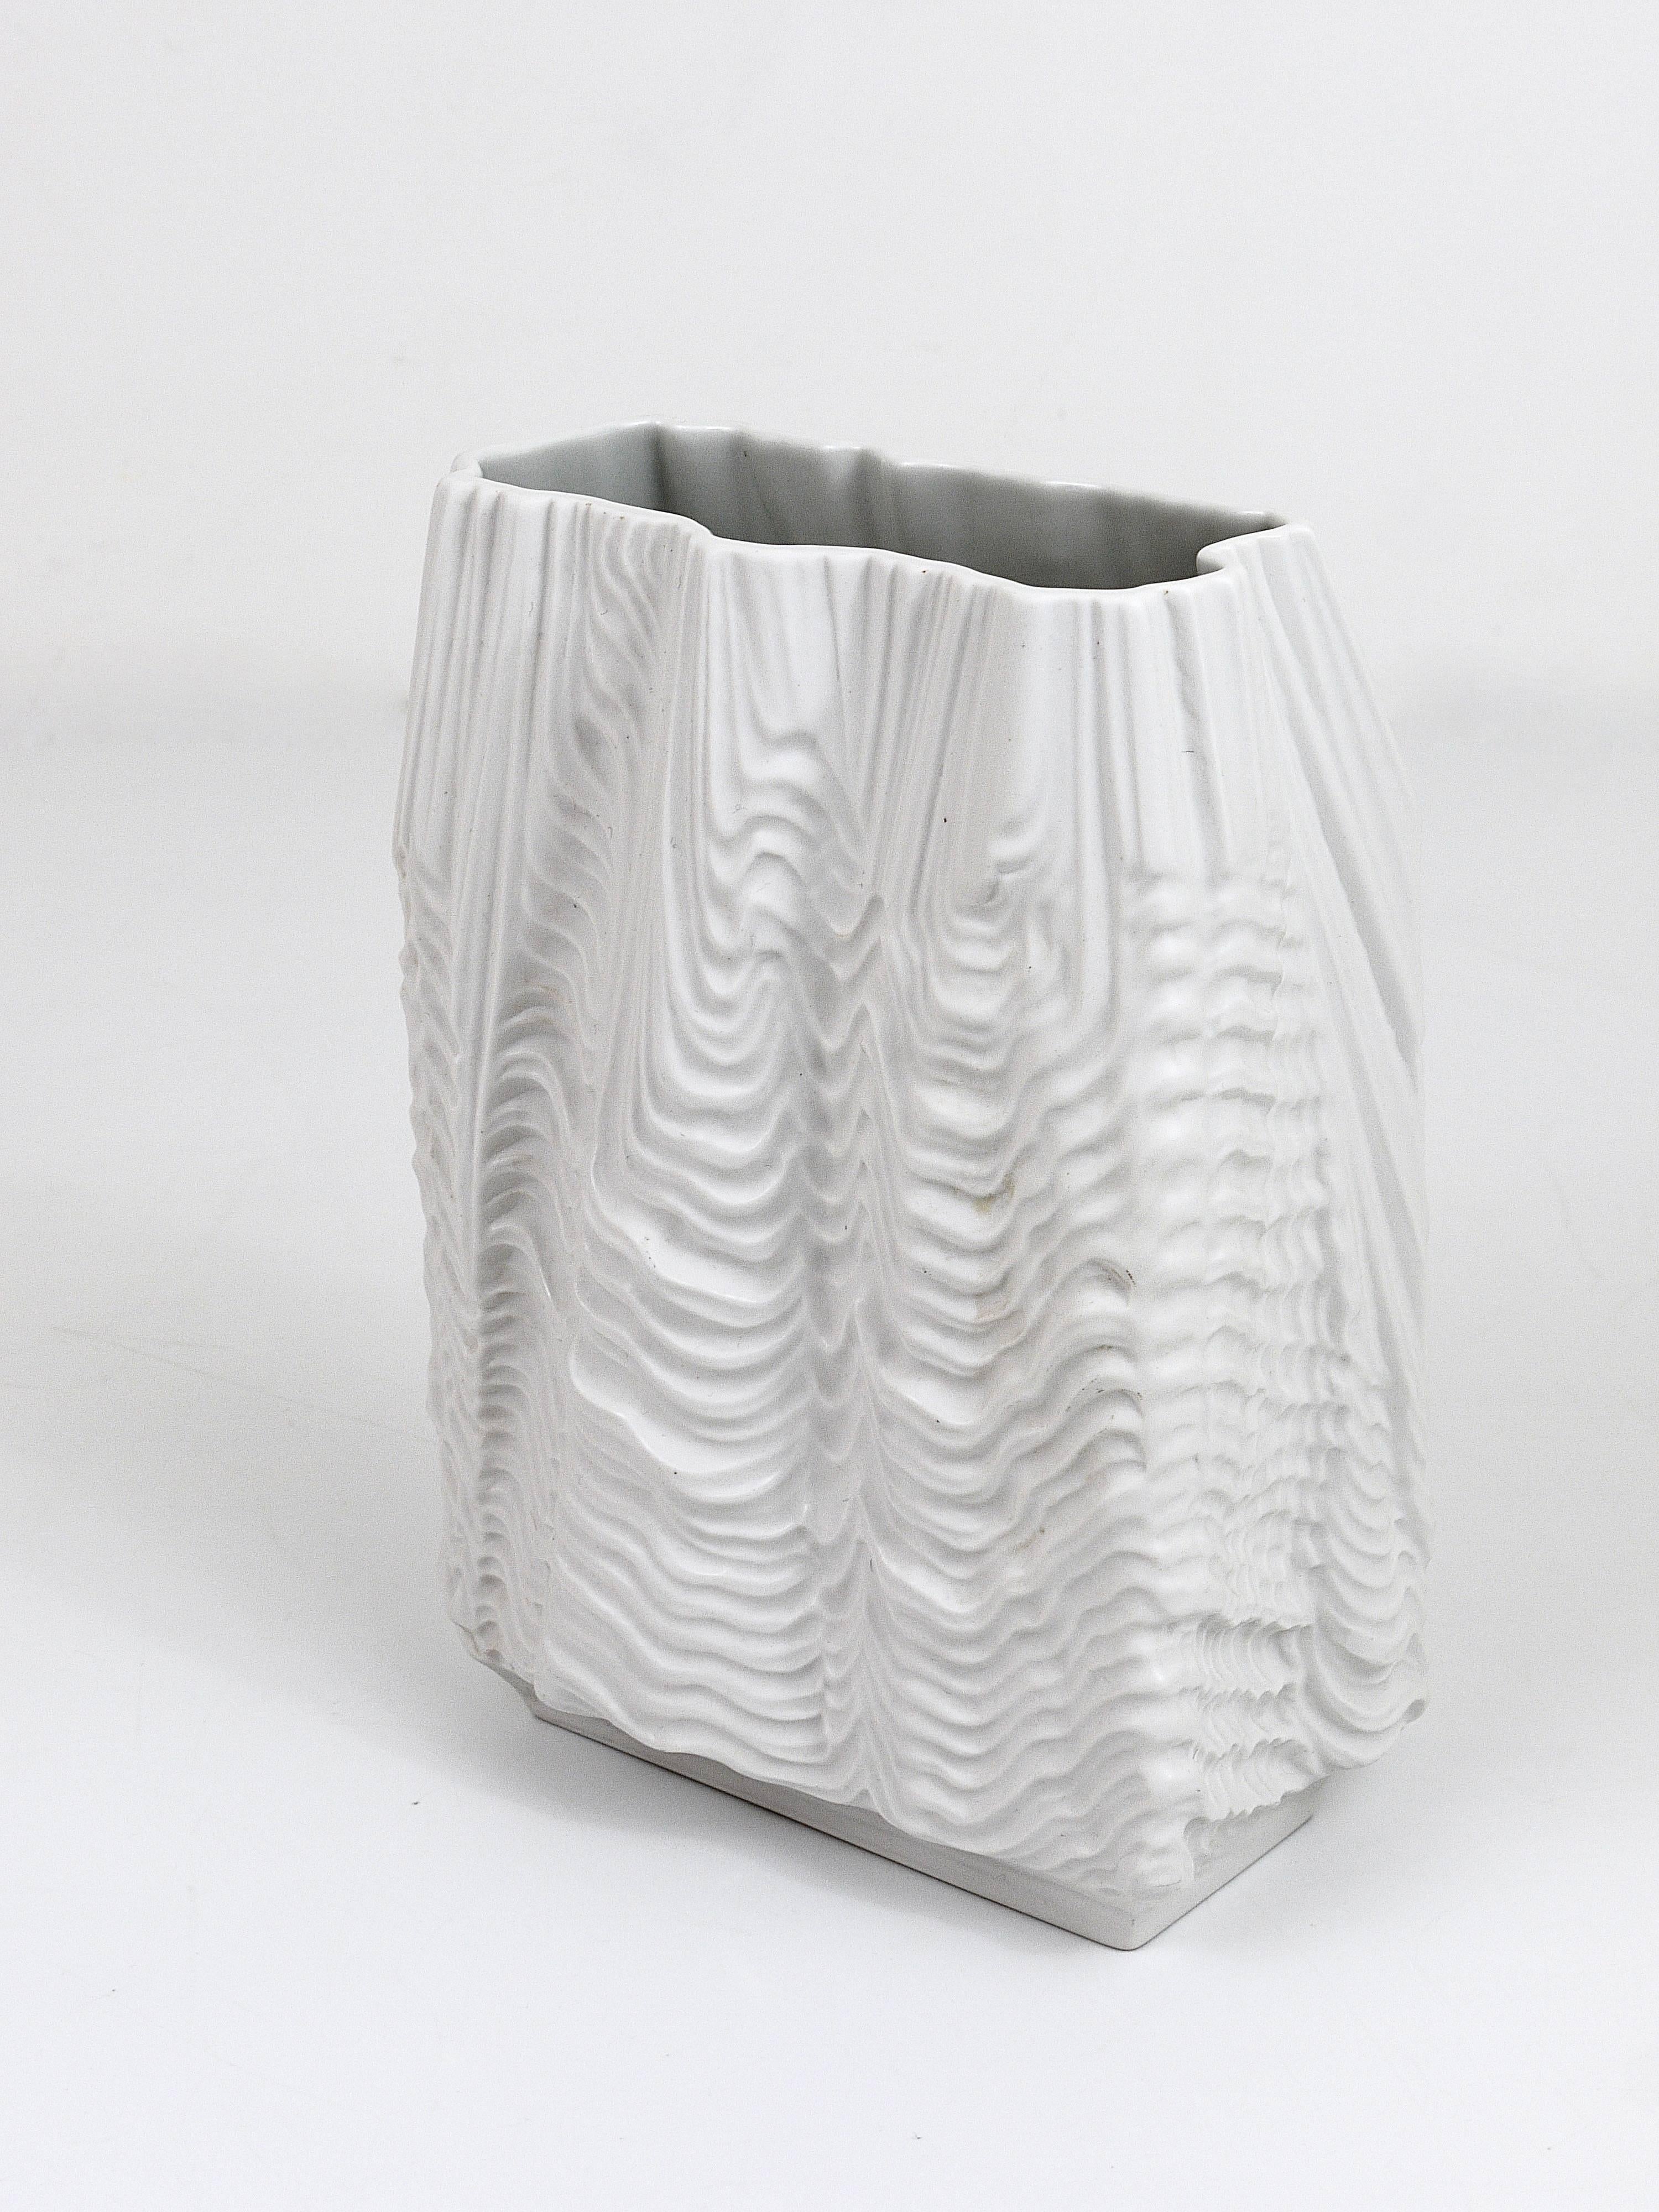 Large Martin Freyer White Porcelain Vase, Rosenthal Studio Linie, Germany, 1960 5